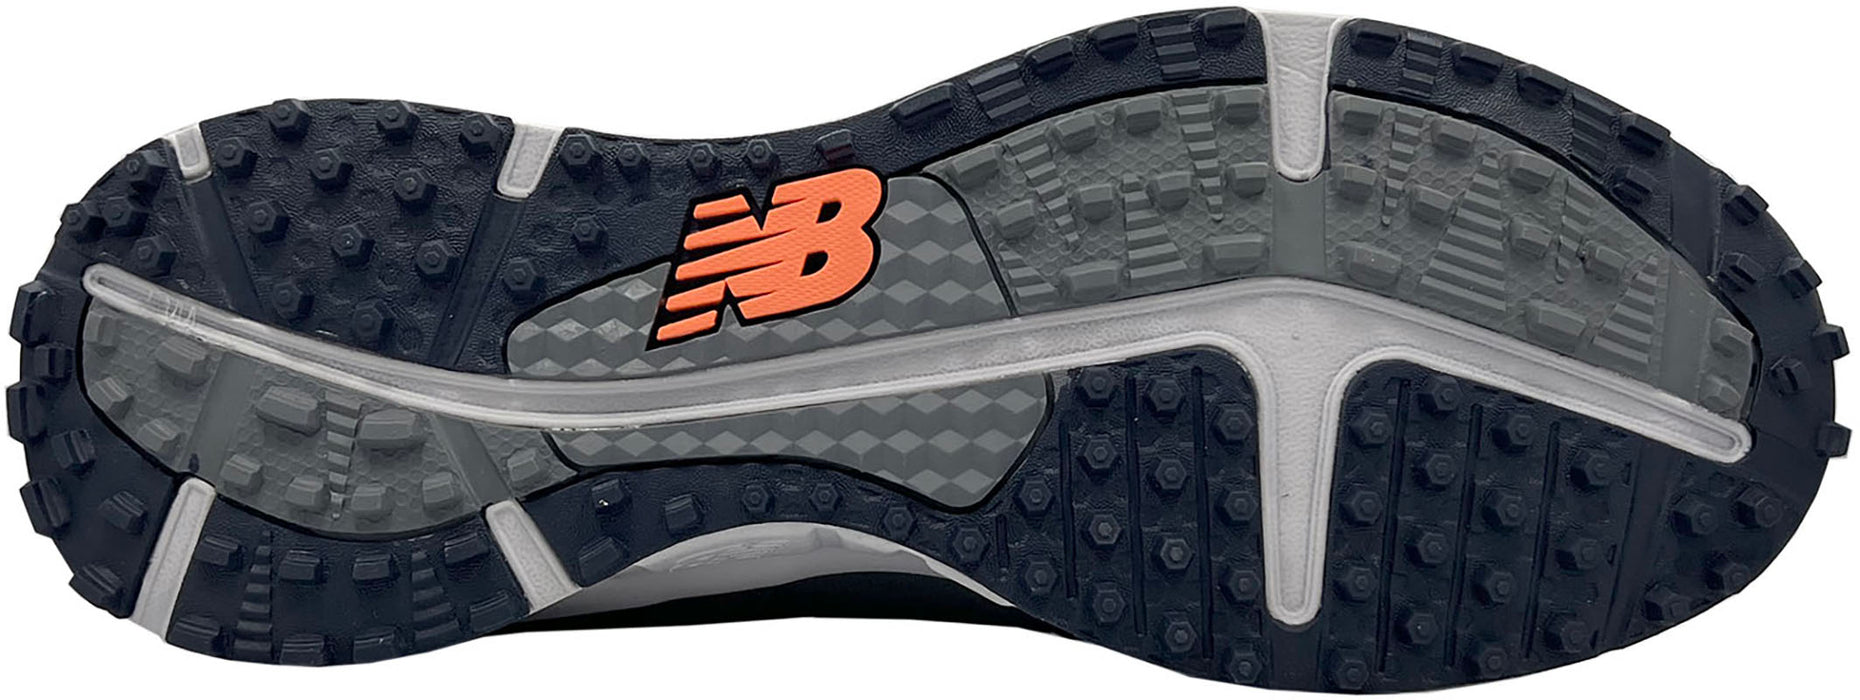  New Balance Men's 997 SL Spikeless Golf Shoes - Grey/Orange